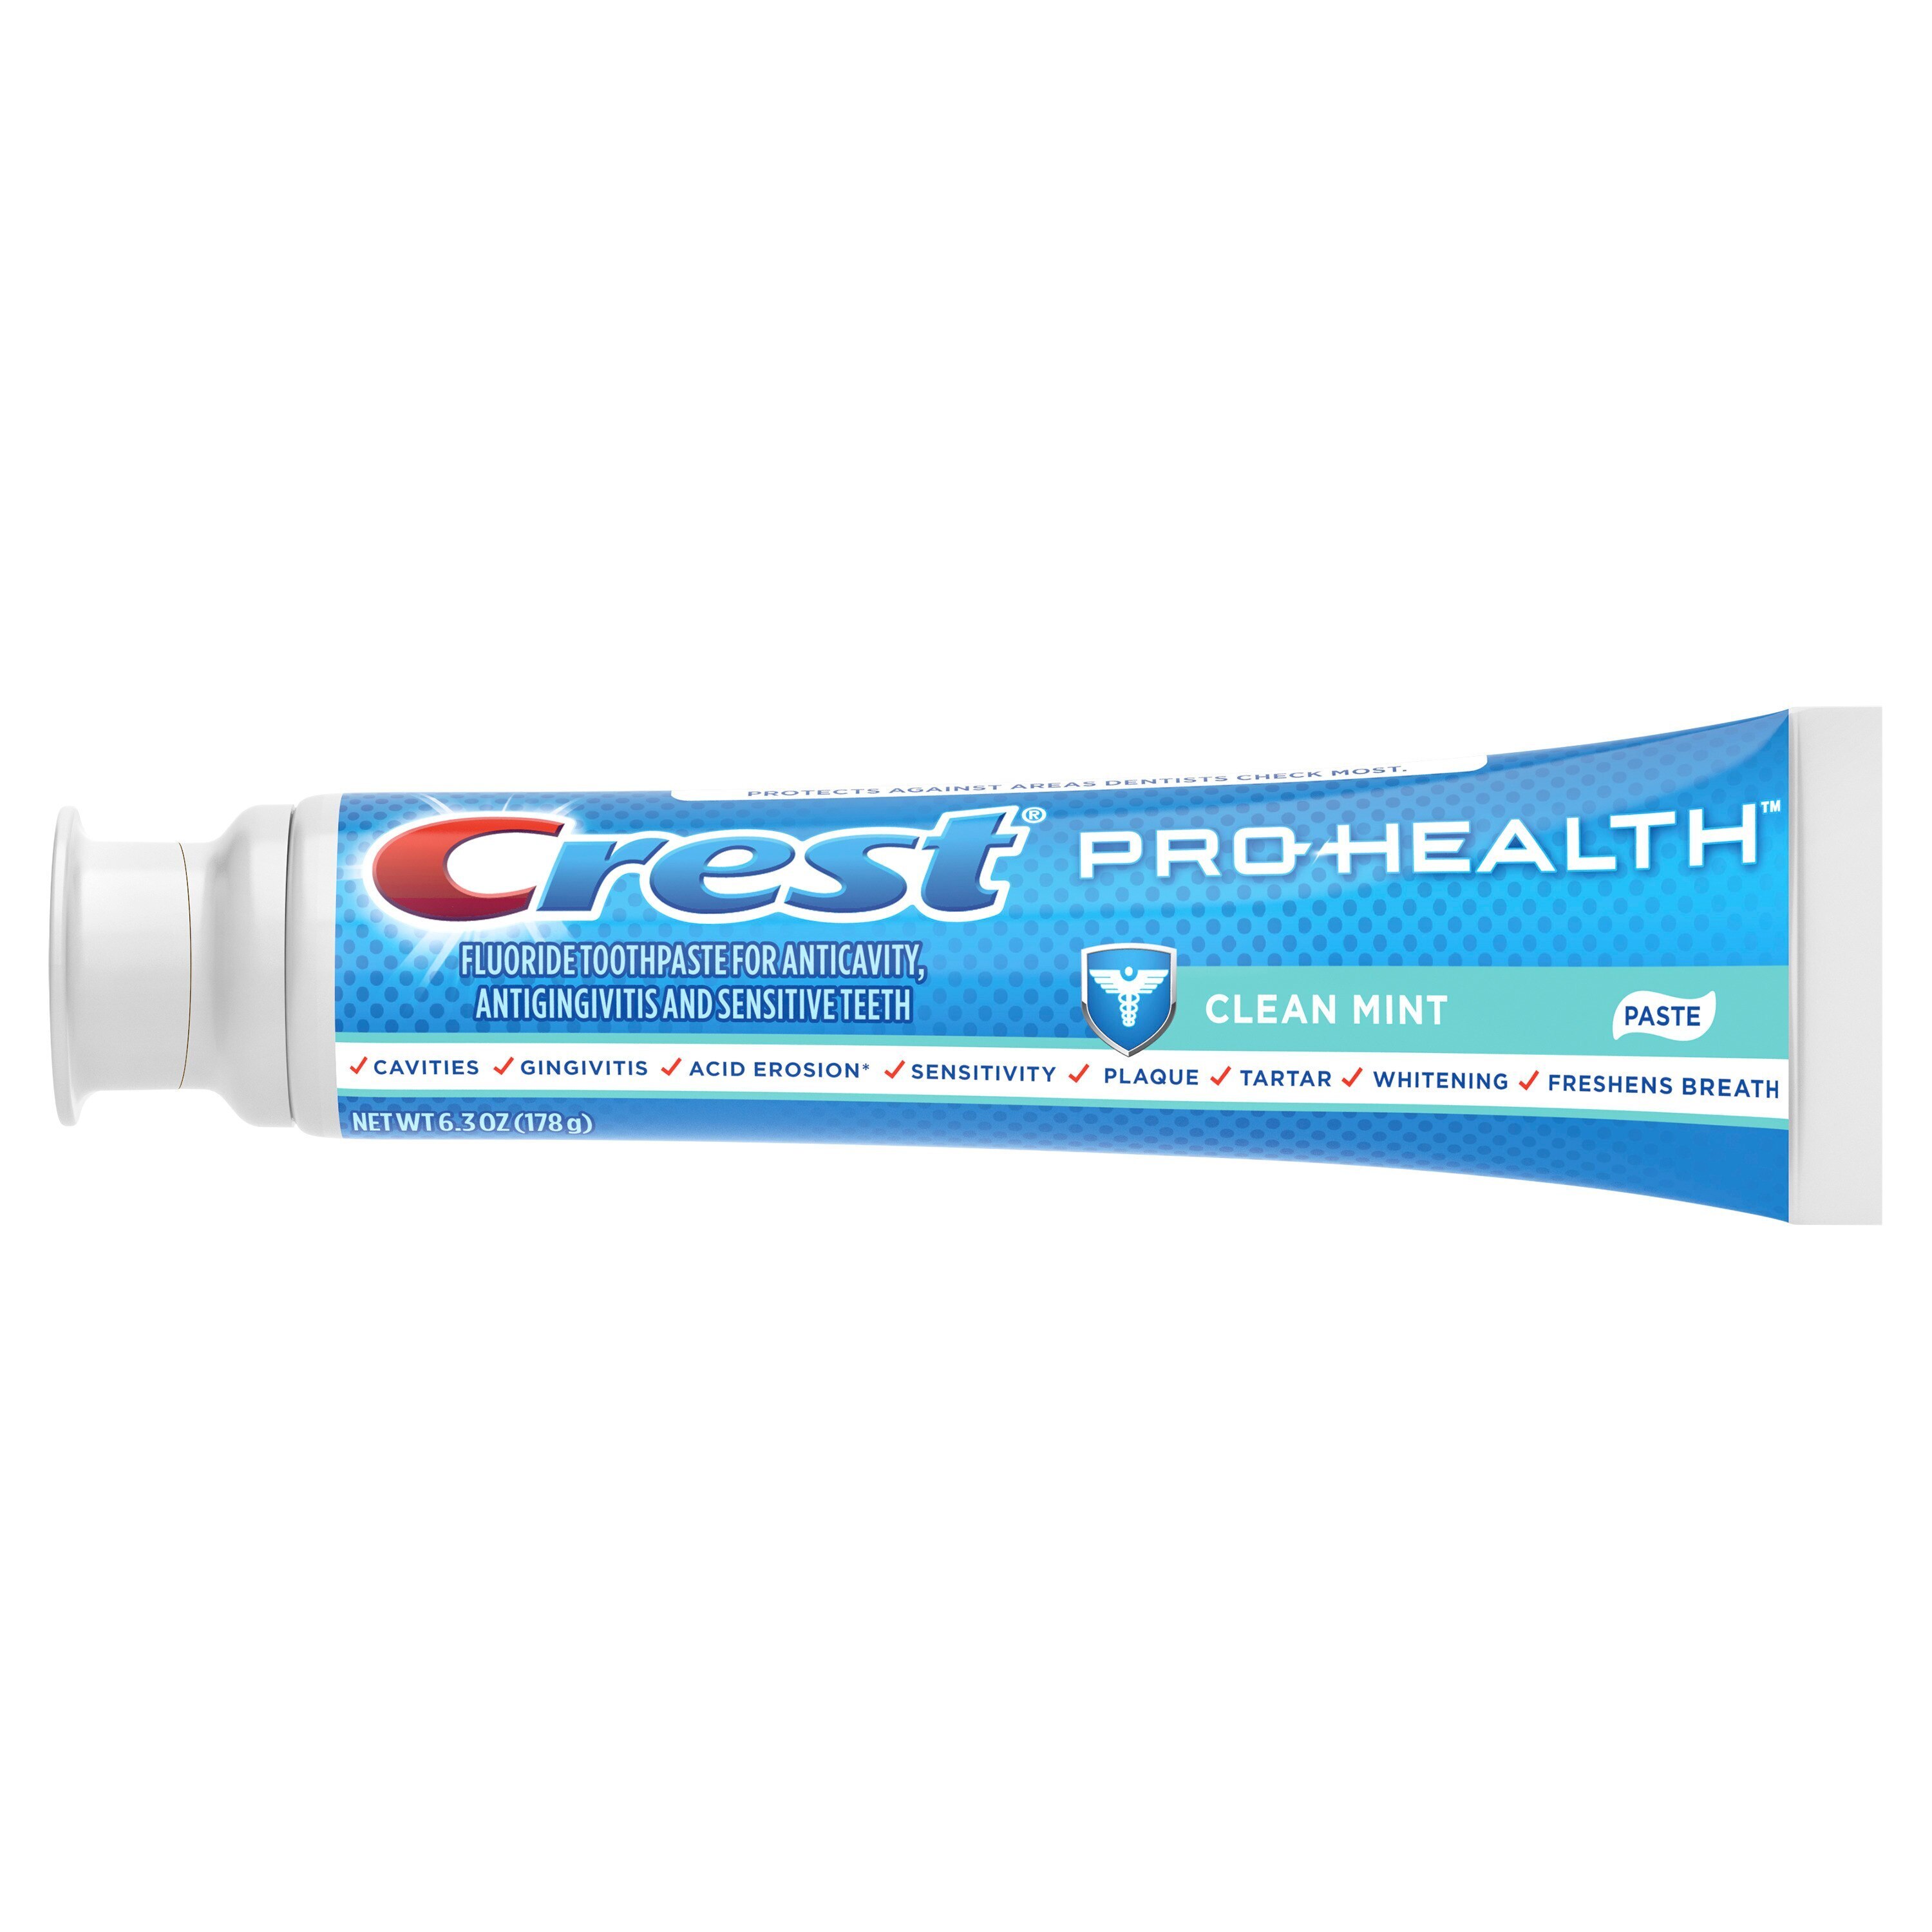 Cvs crest pro health conduent used